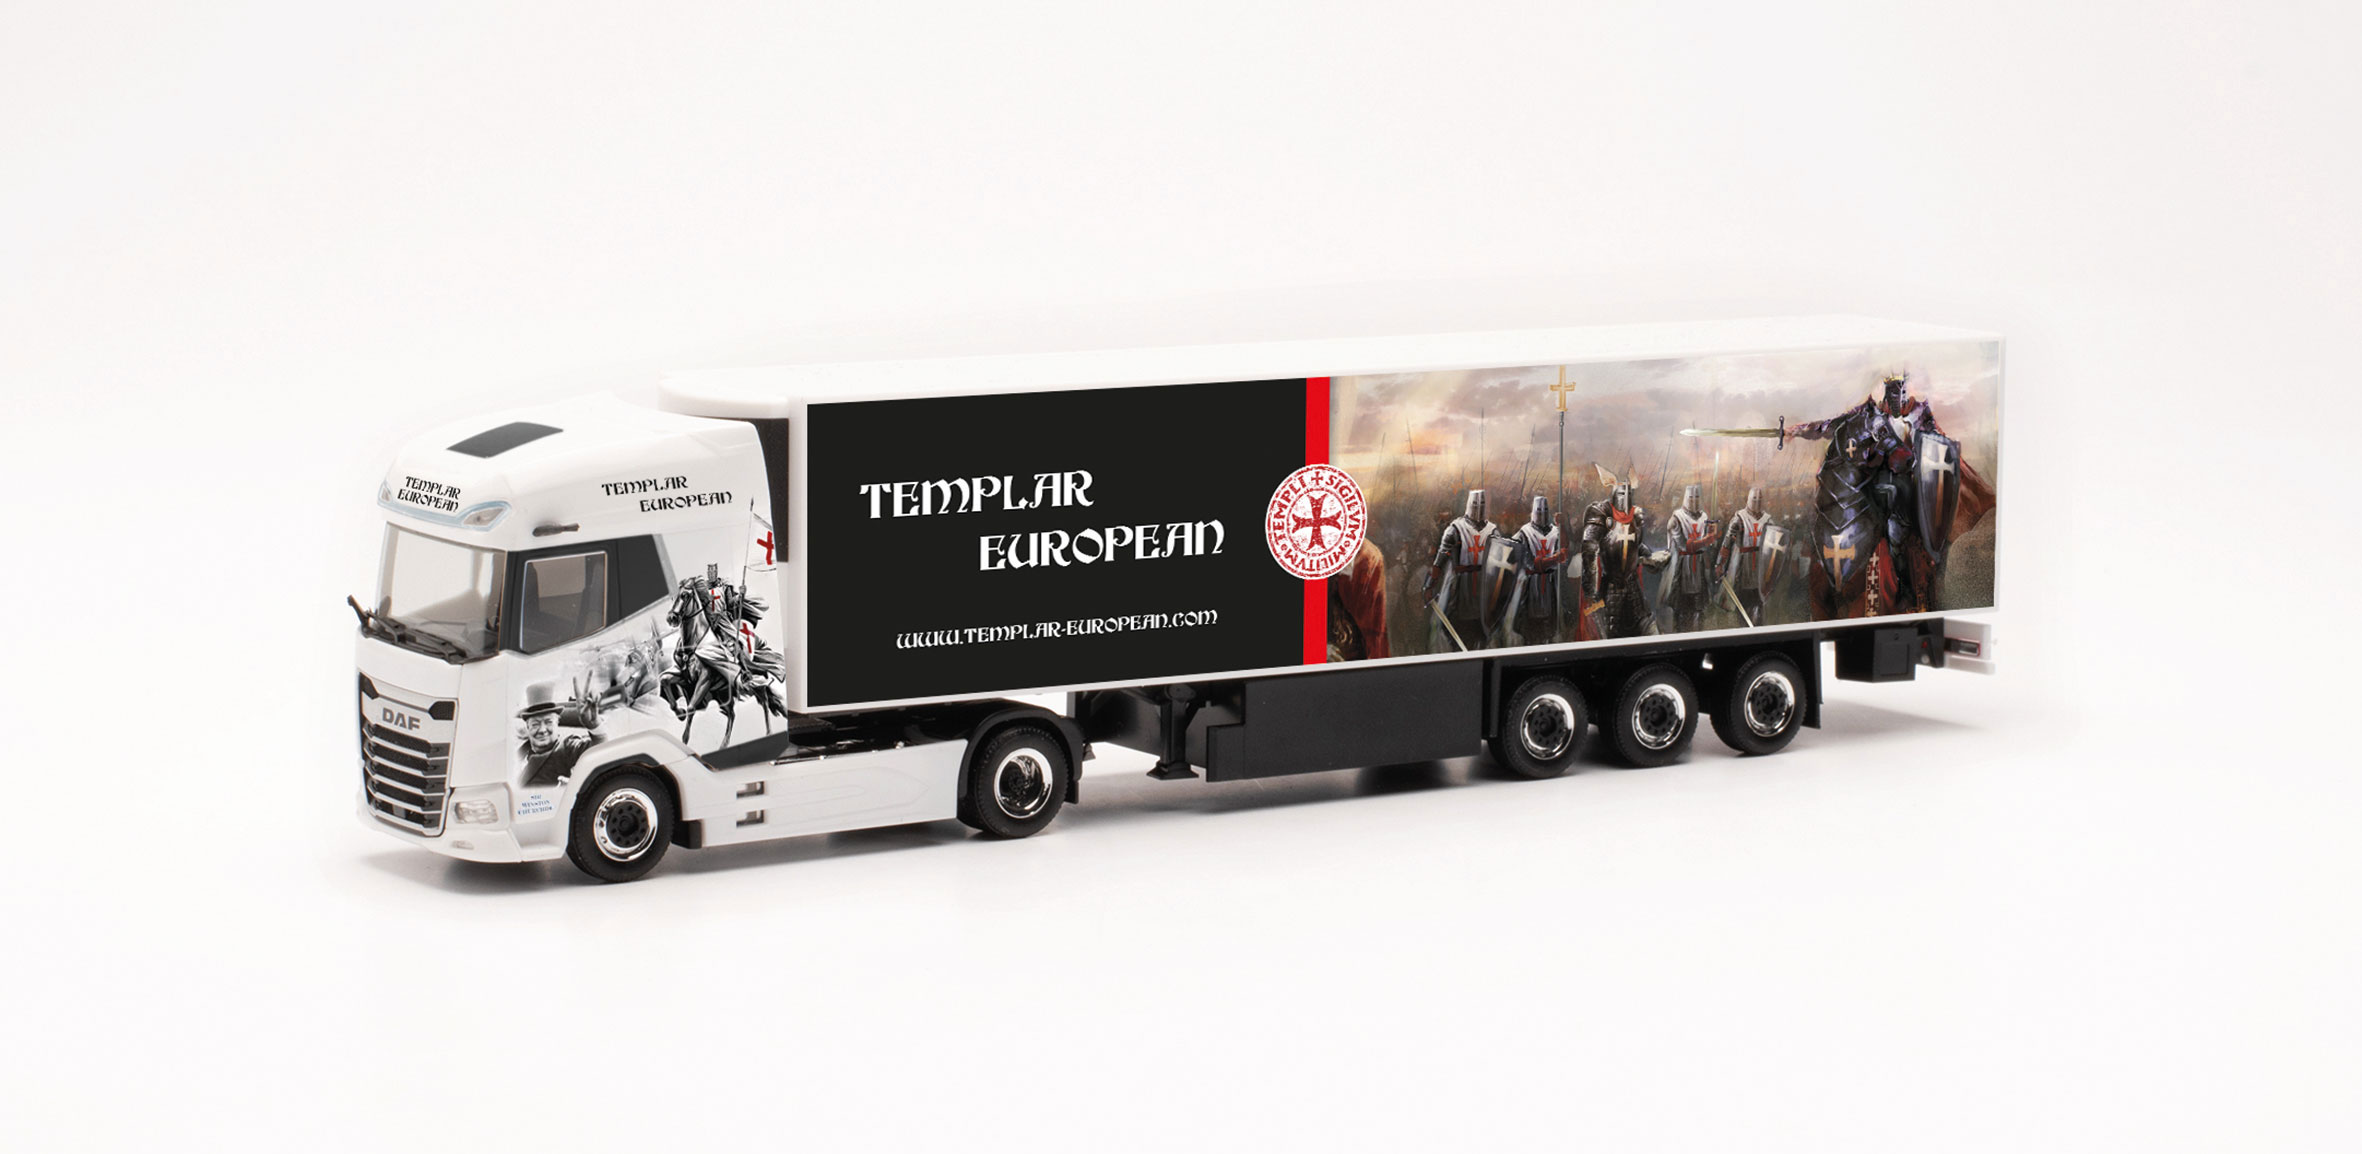 DAF XG+ Kühlkoffer-Sattelzug "Templar European" (Polen/Ostrow Wielkopolski)